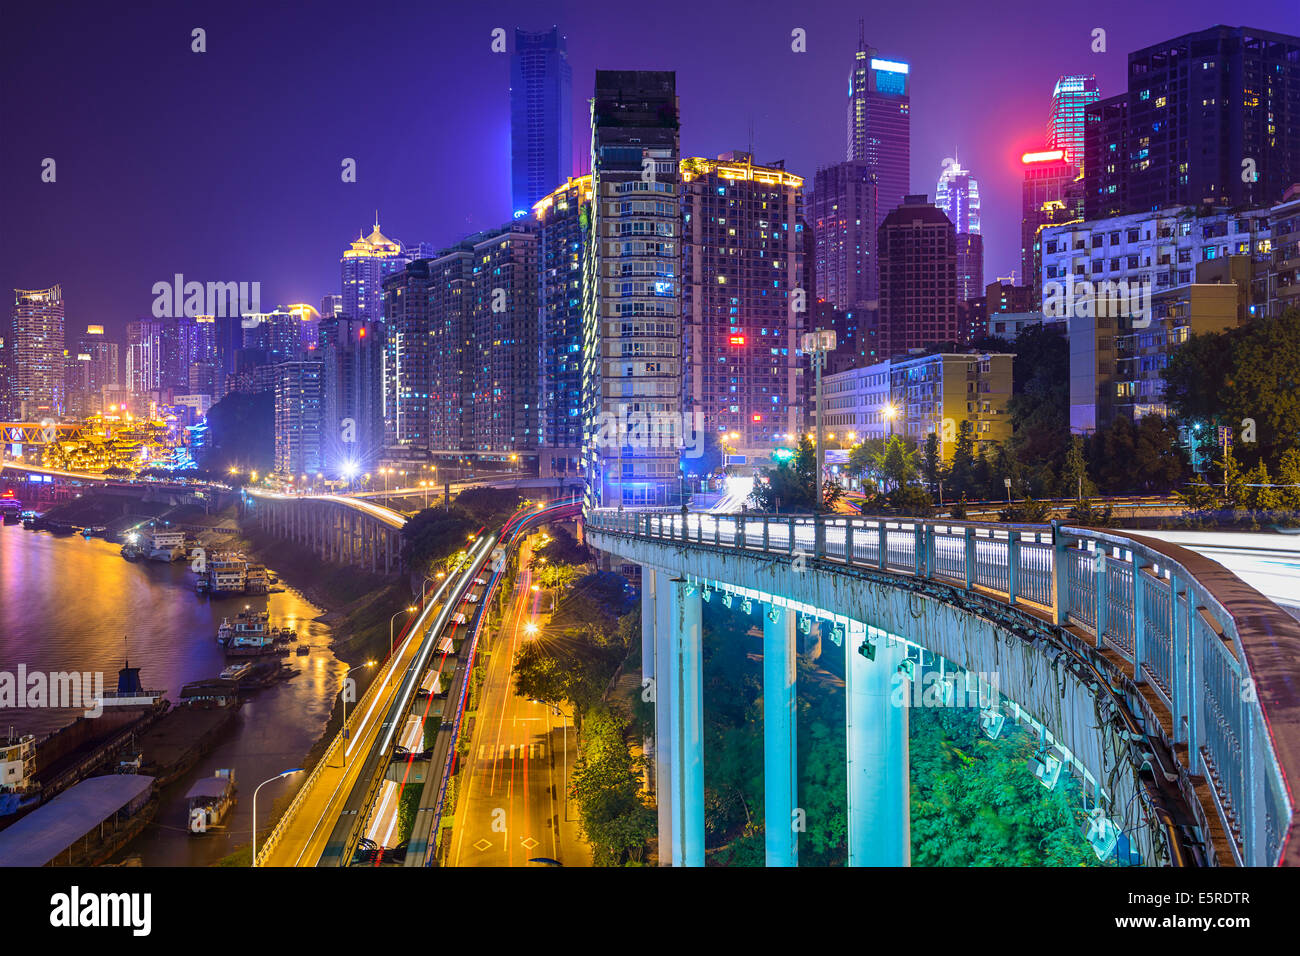 Chongqing Chine Nuit Paysage Urbain Photo Stock Alamy